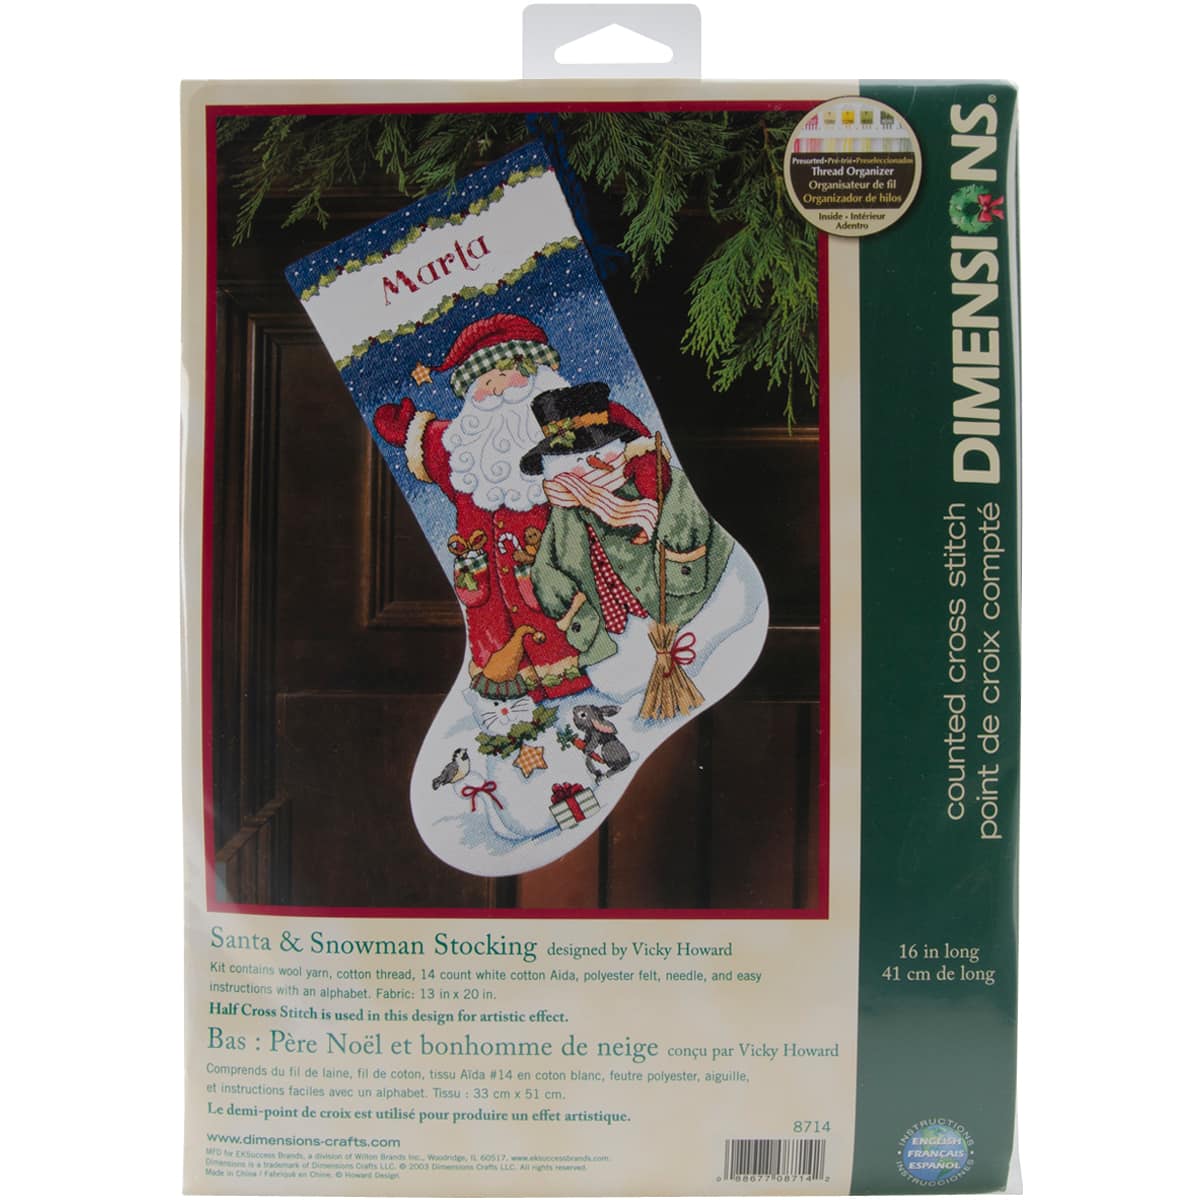 Elf Christmas Stocking Kit - The Candymaker - # 7052-K – Knitting